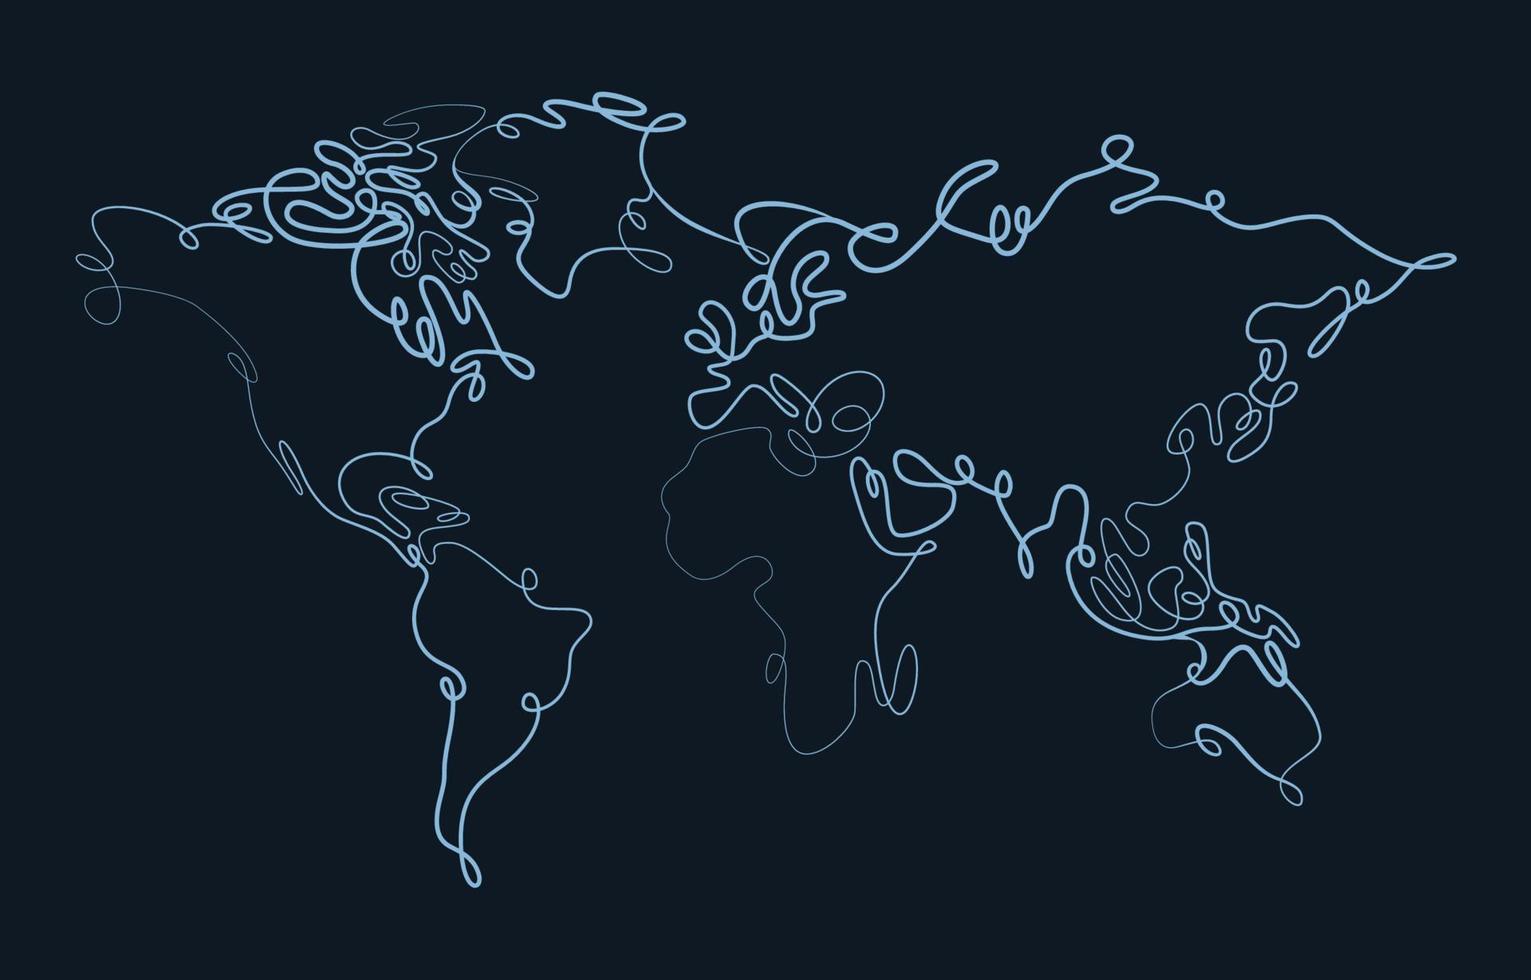 uno carrera línea mundo mapa concepto vector